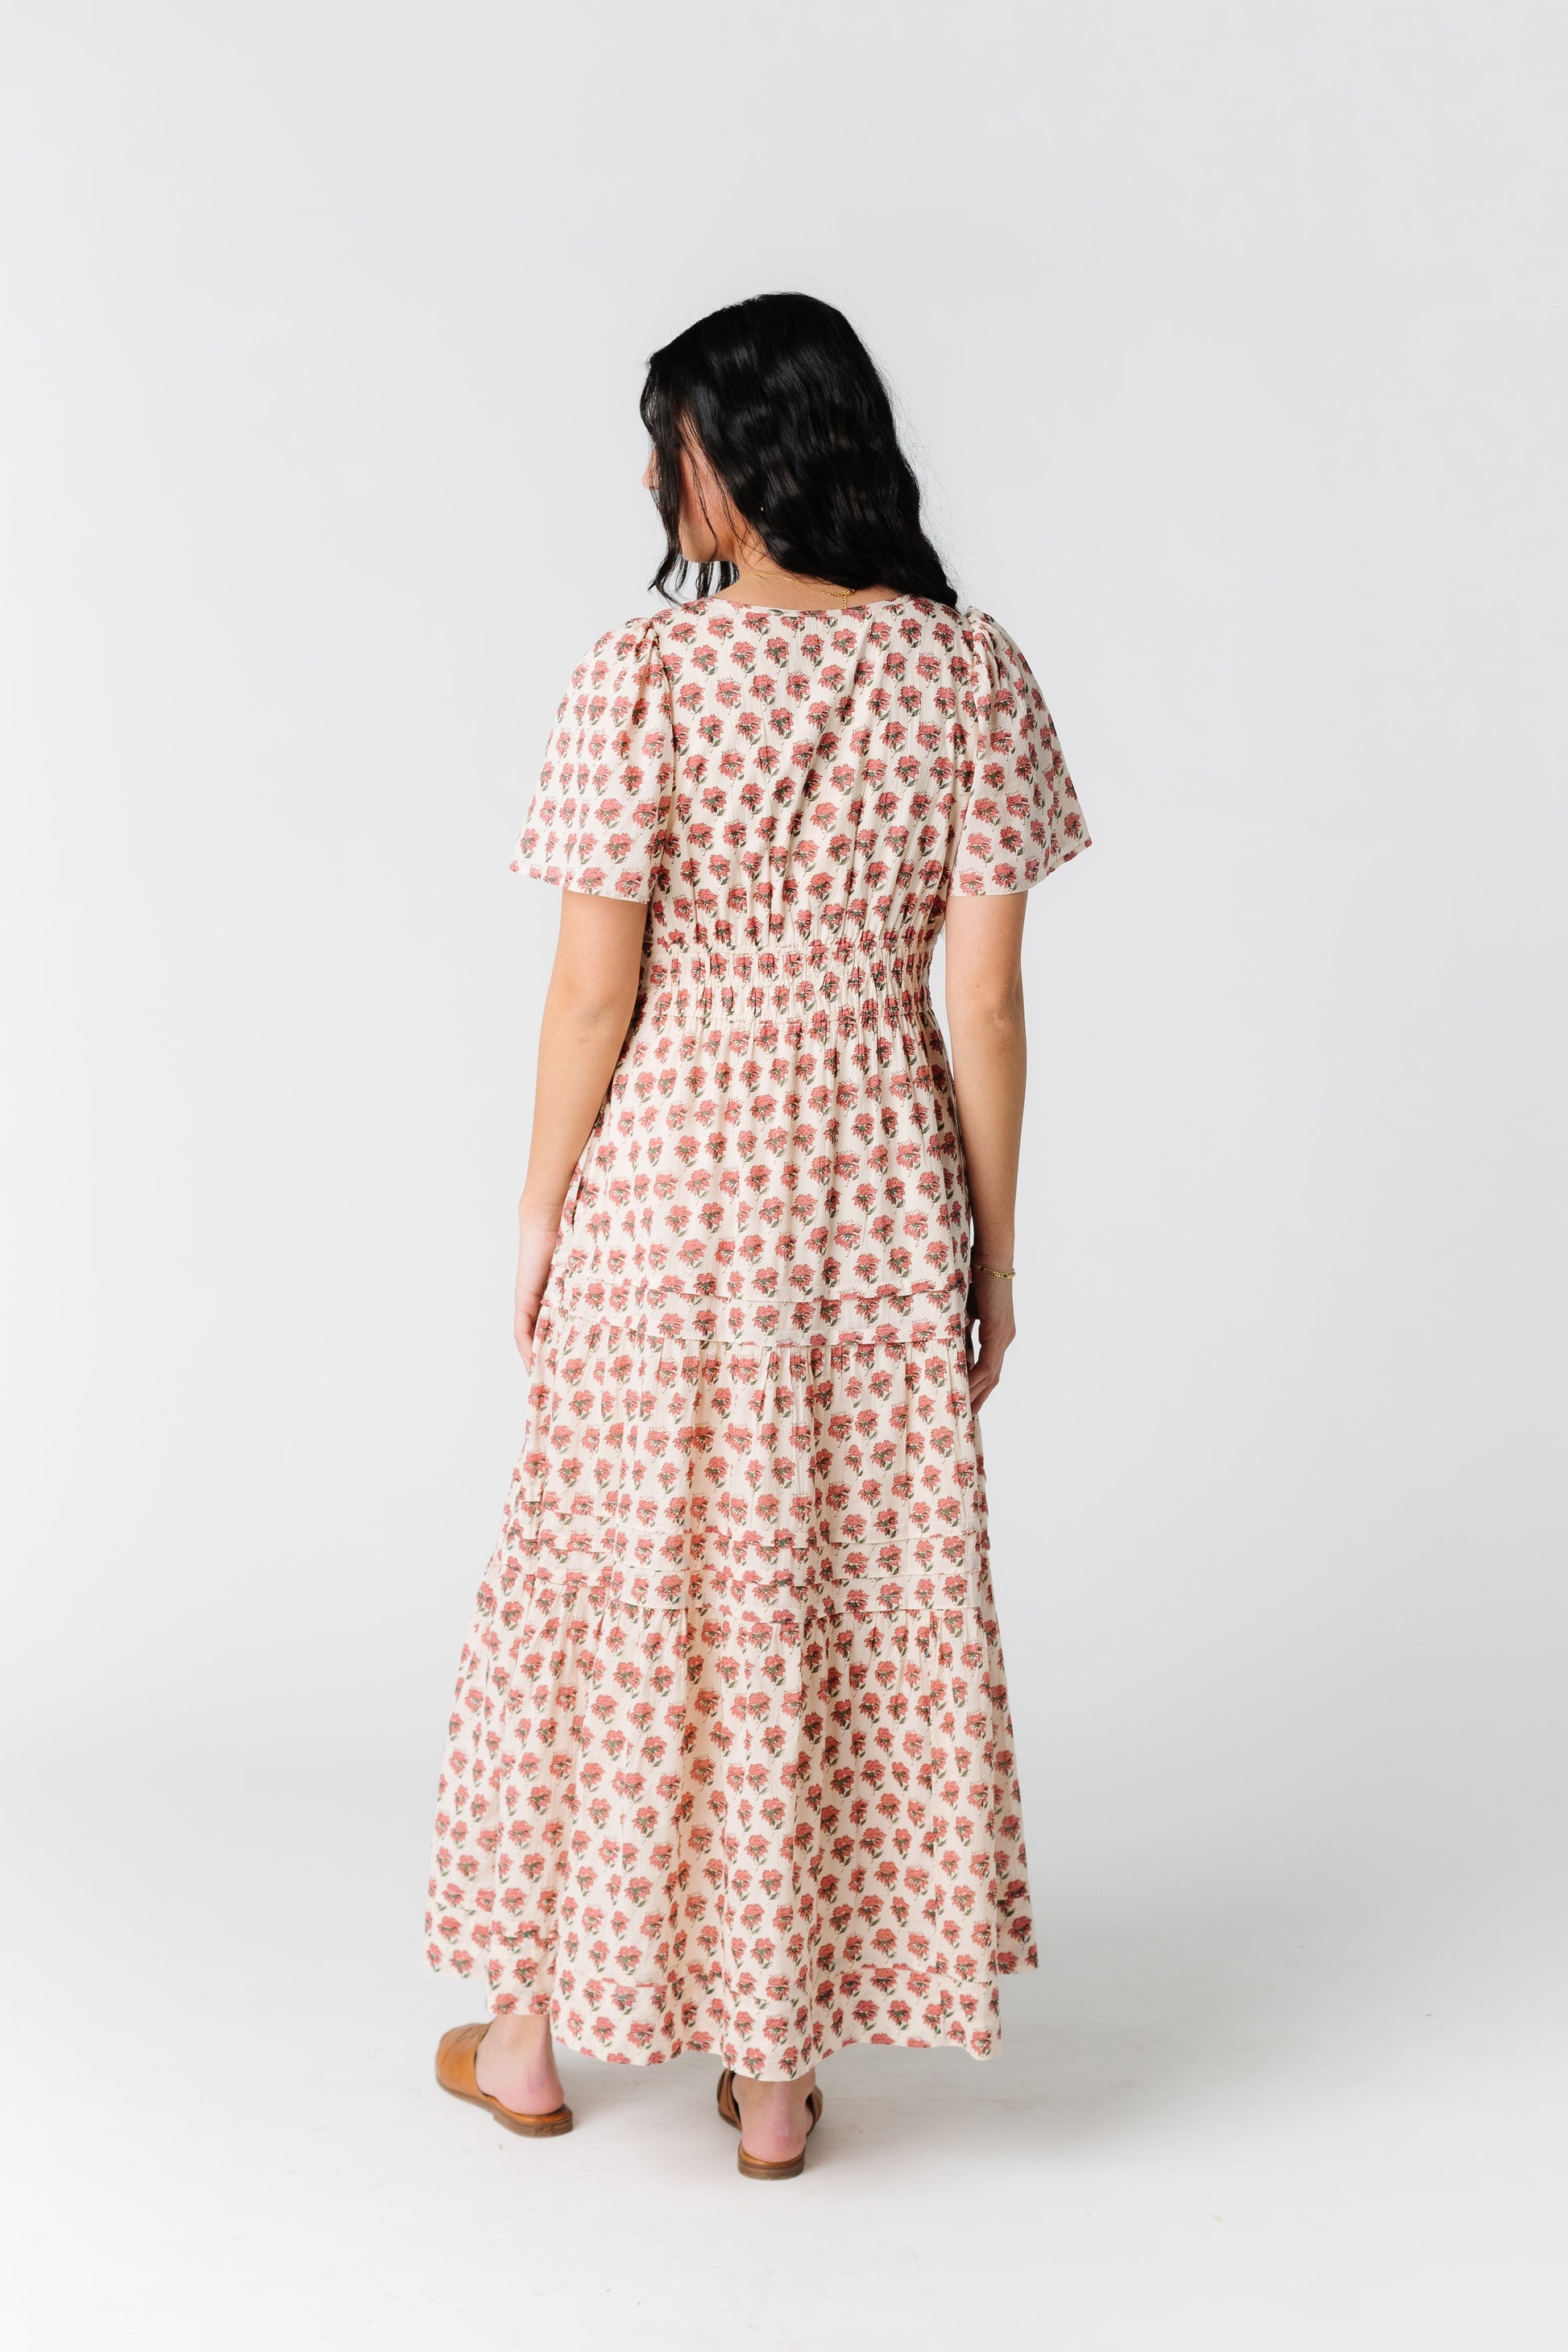 Citrus Shae Print Dress - Peach Print WOMEN'S DRESS Citrus 